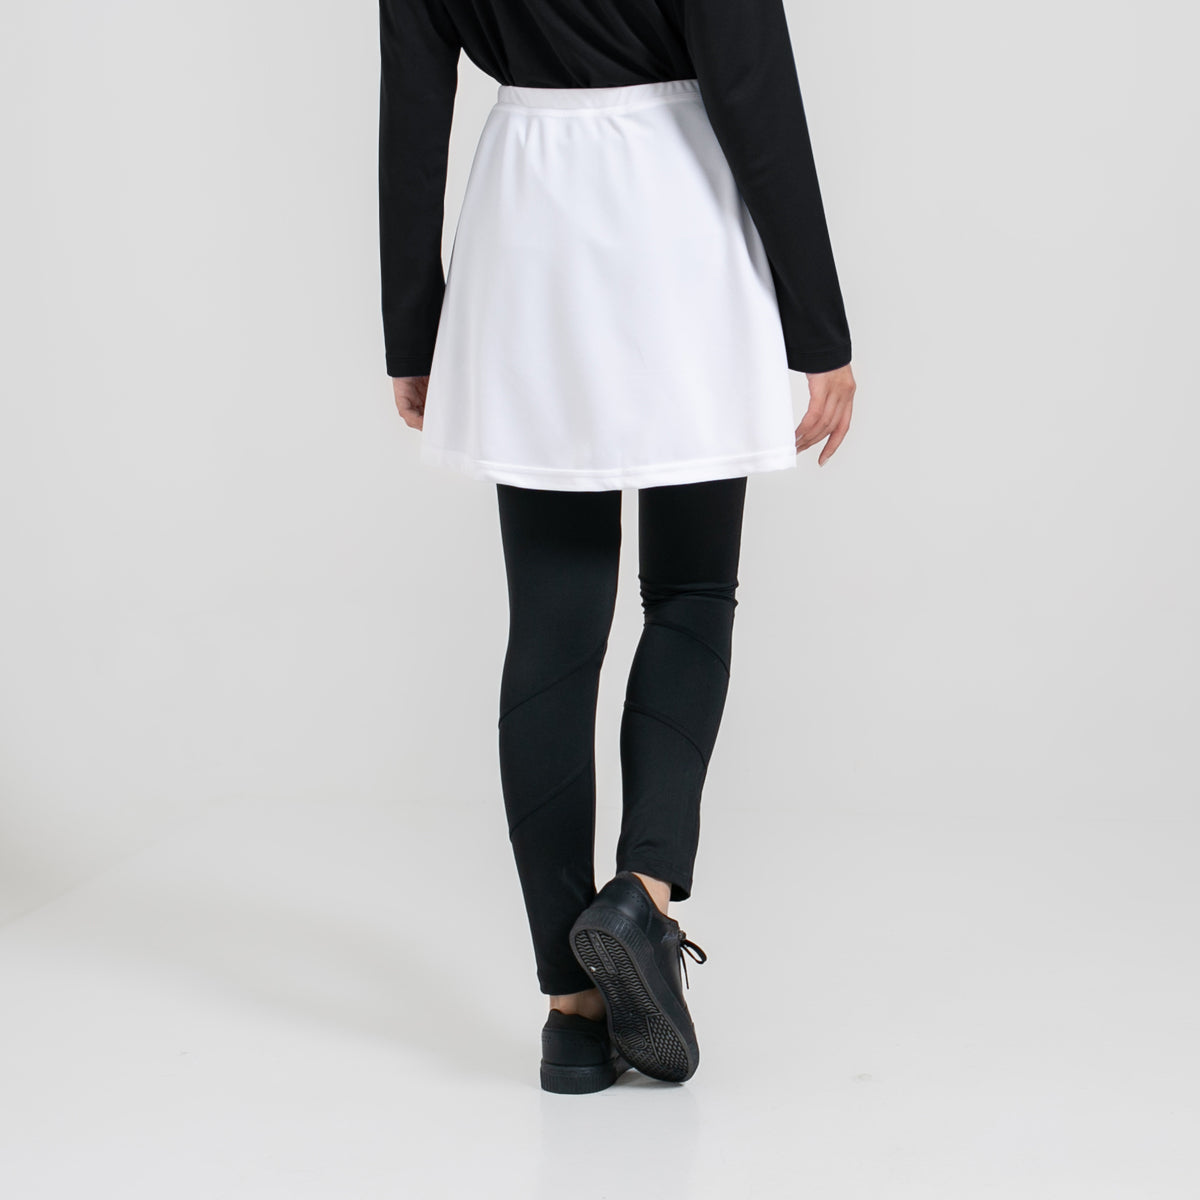 NOORE - Indiana Skirt - White